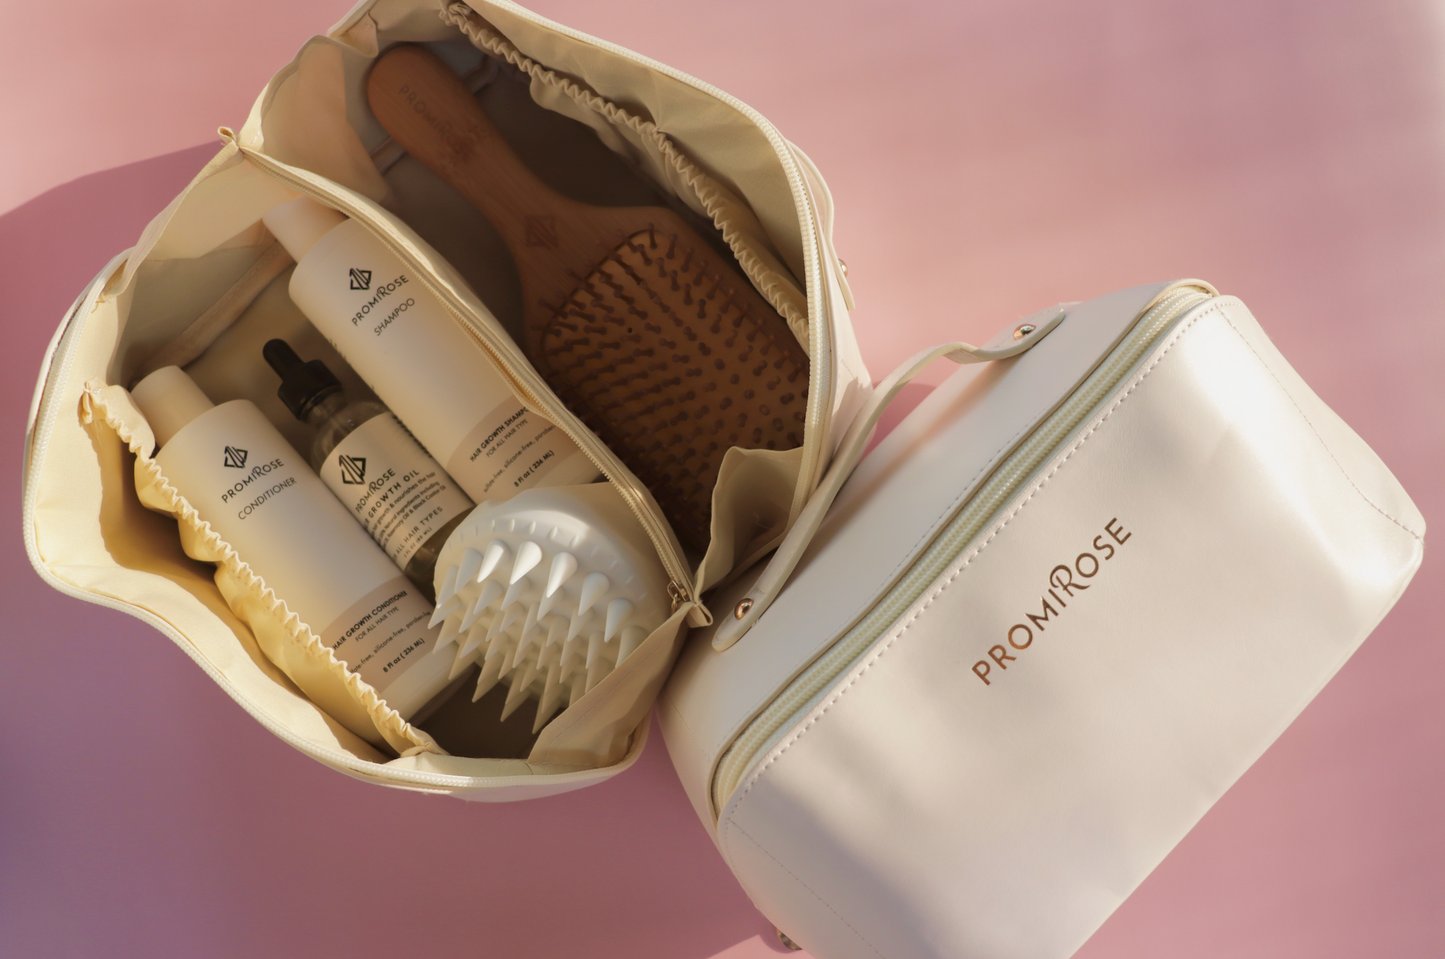 Promirose Shampoo & Conditioner + travel bag